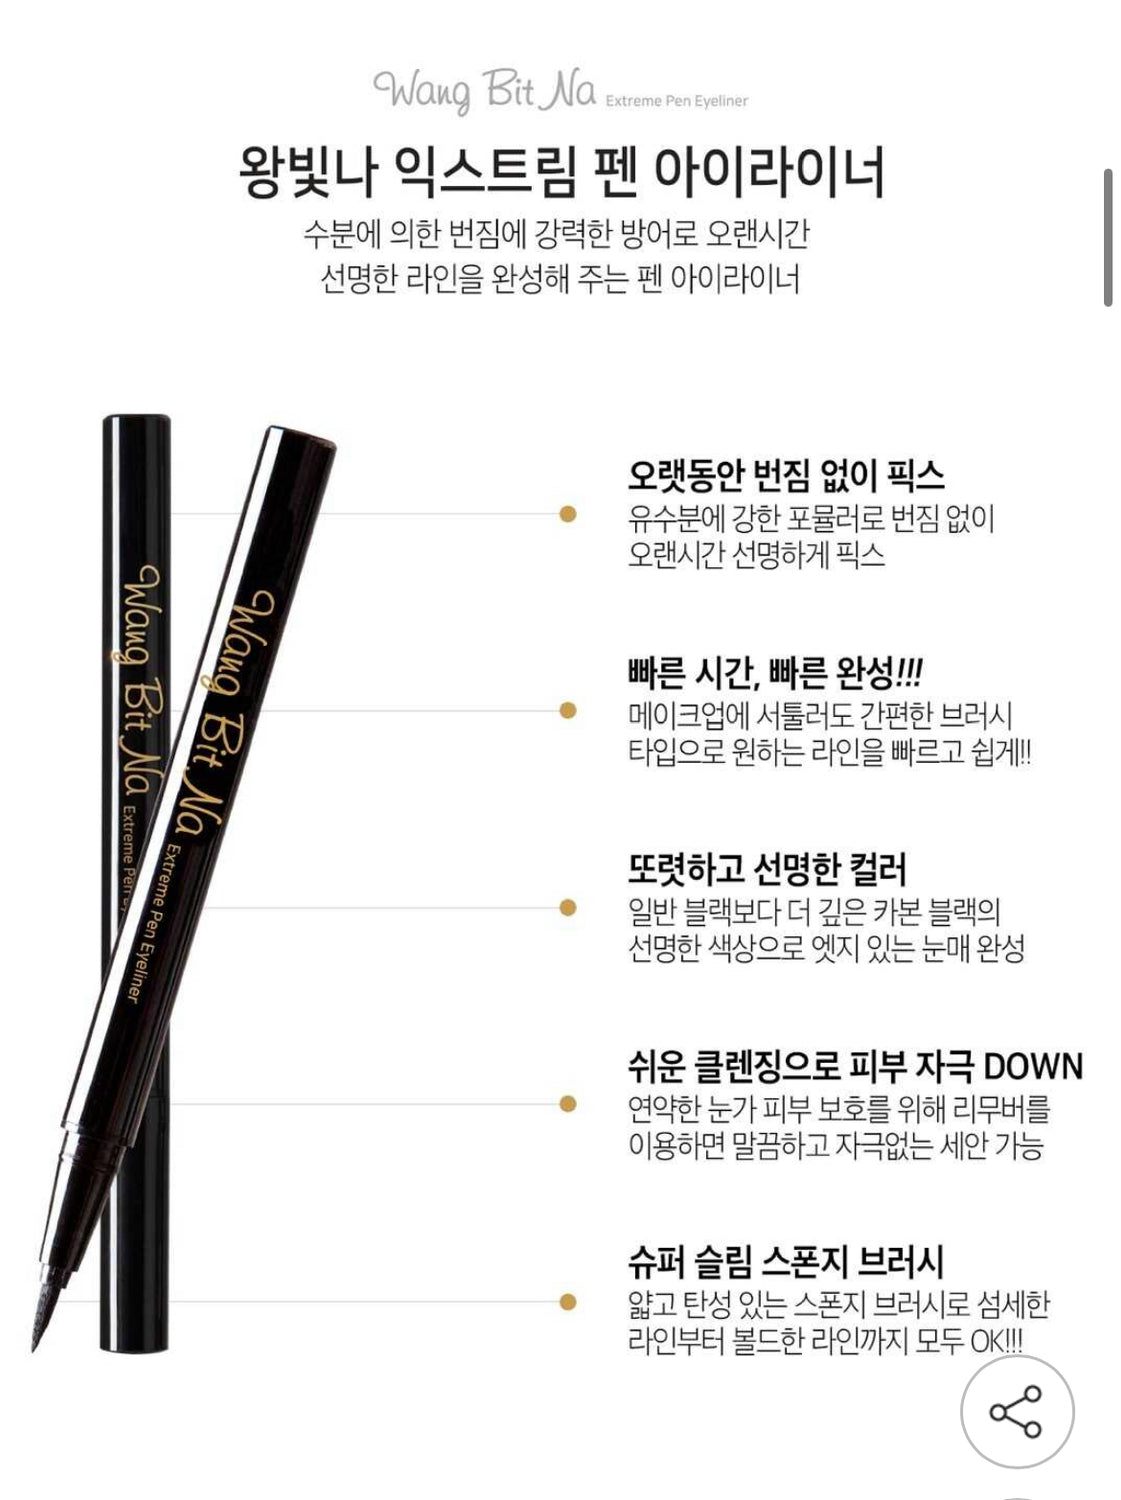 Wang Bit Na oilproof & waterproof Pen Eyeliner